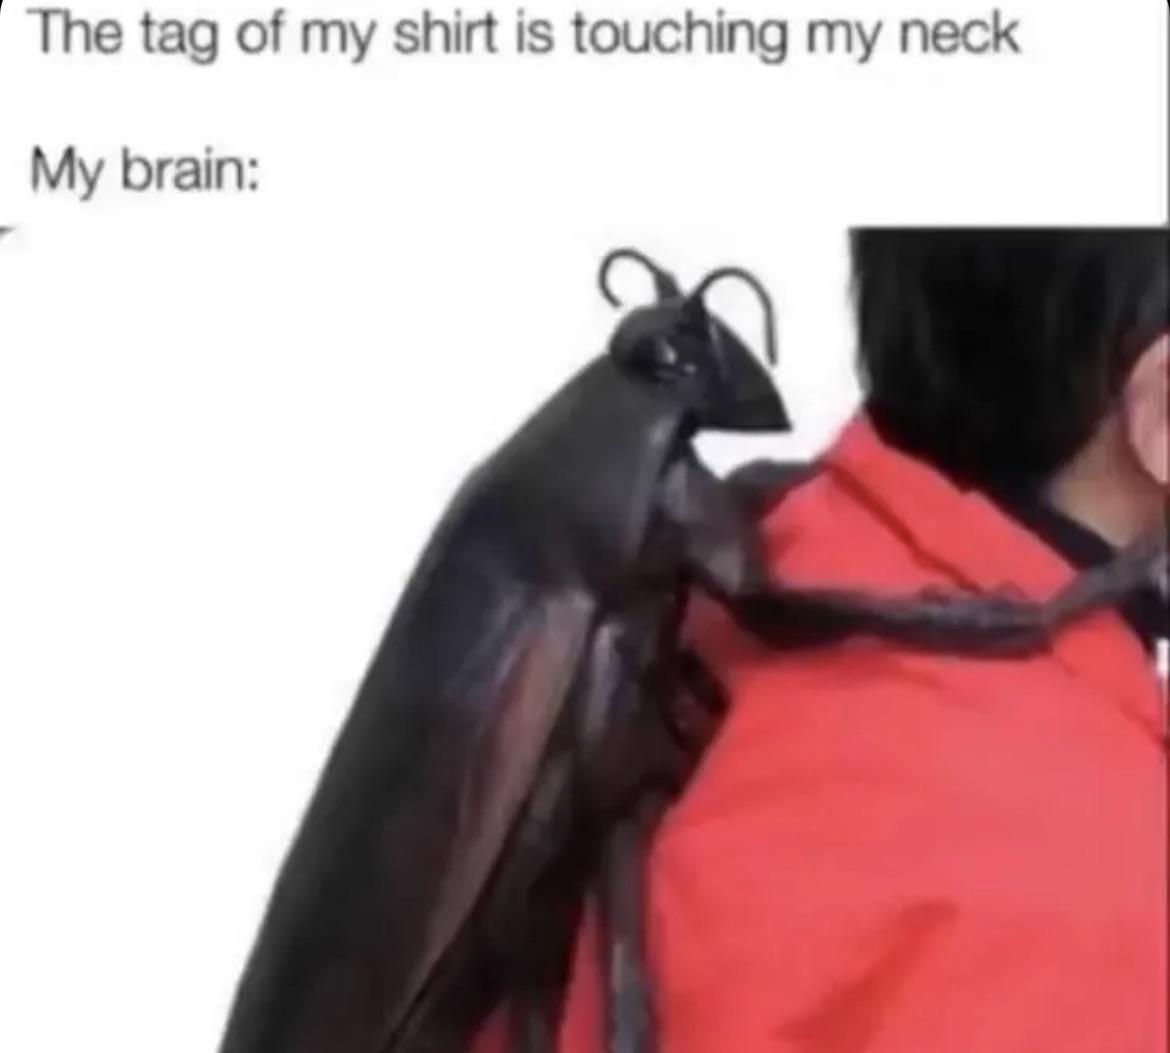 dank memes  - tag of my shirt touching my neck - The tag of my shirt is touching my neck My brain